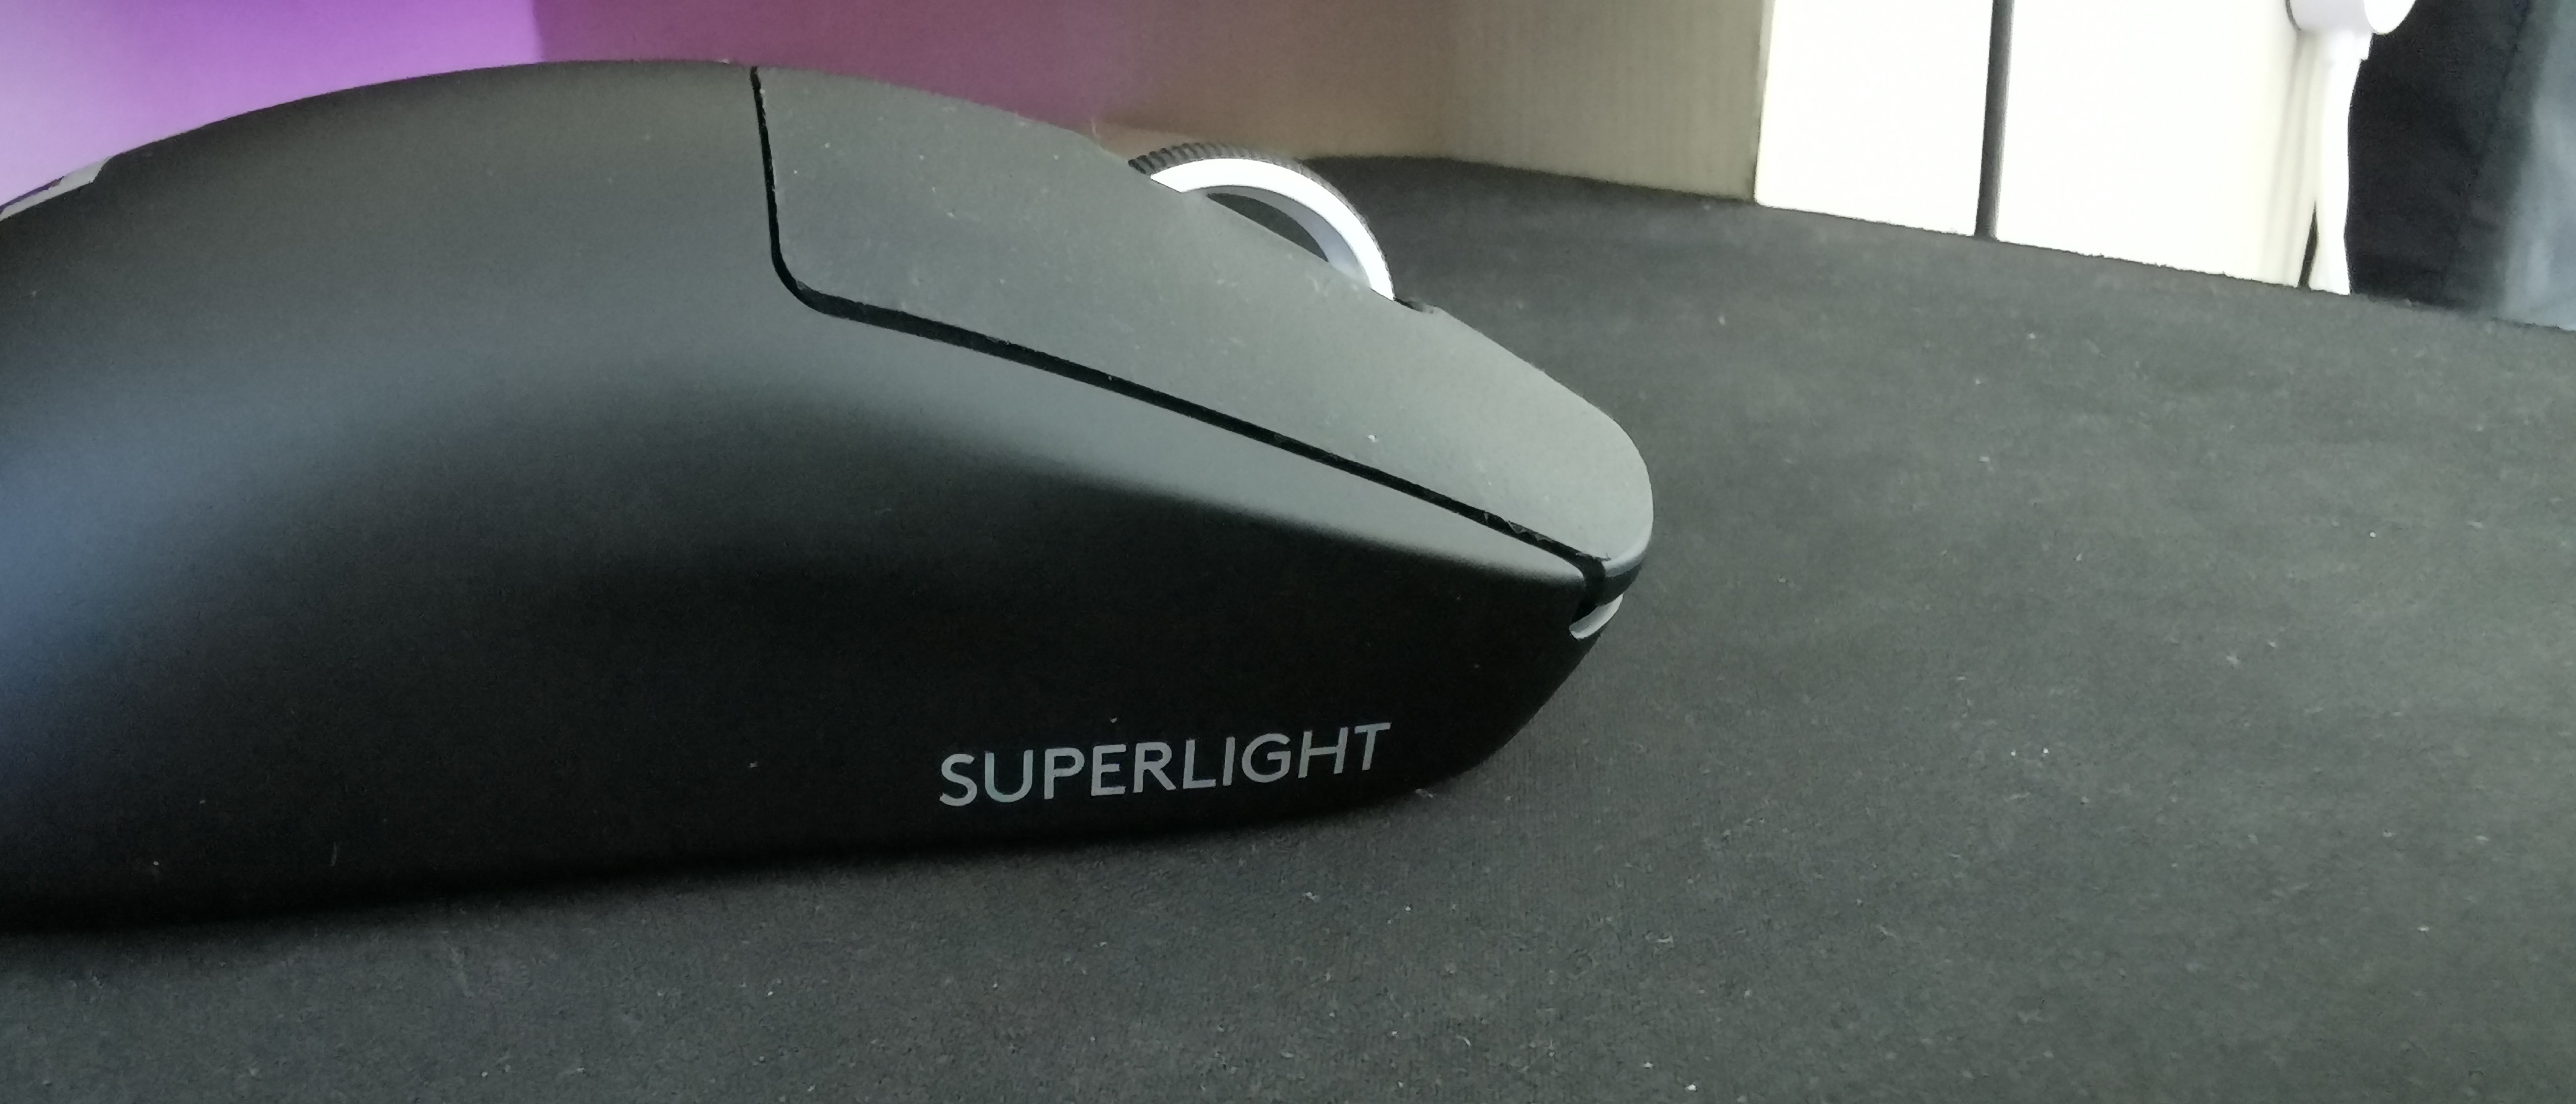 Logitech G Pro X Superlight Wireless Gaming Mouse Review: Heir Ascendant